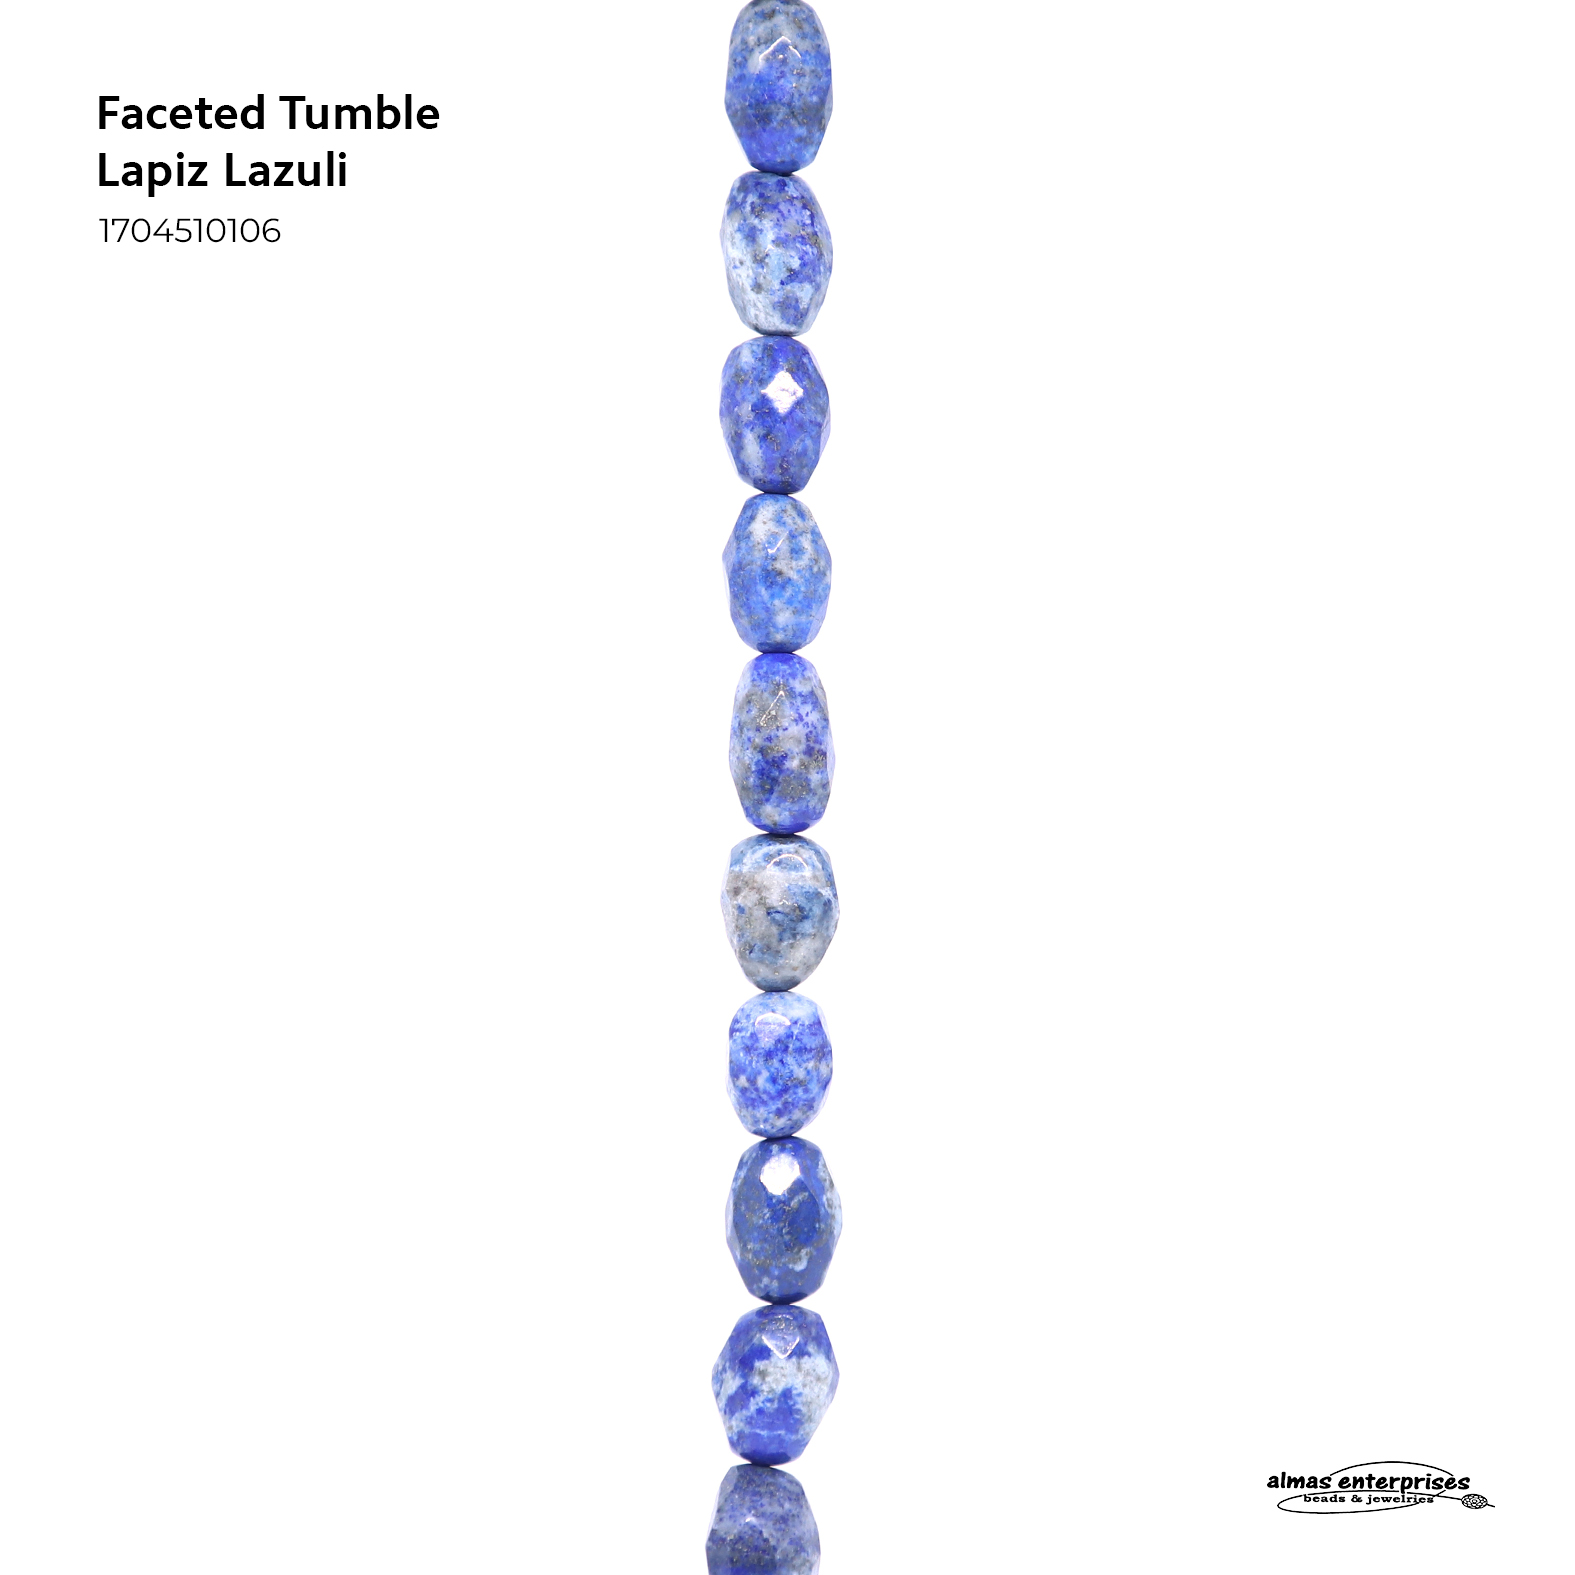 Fac Tumble Lapiz Lazuli